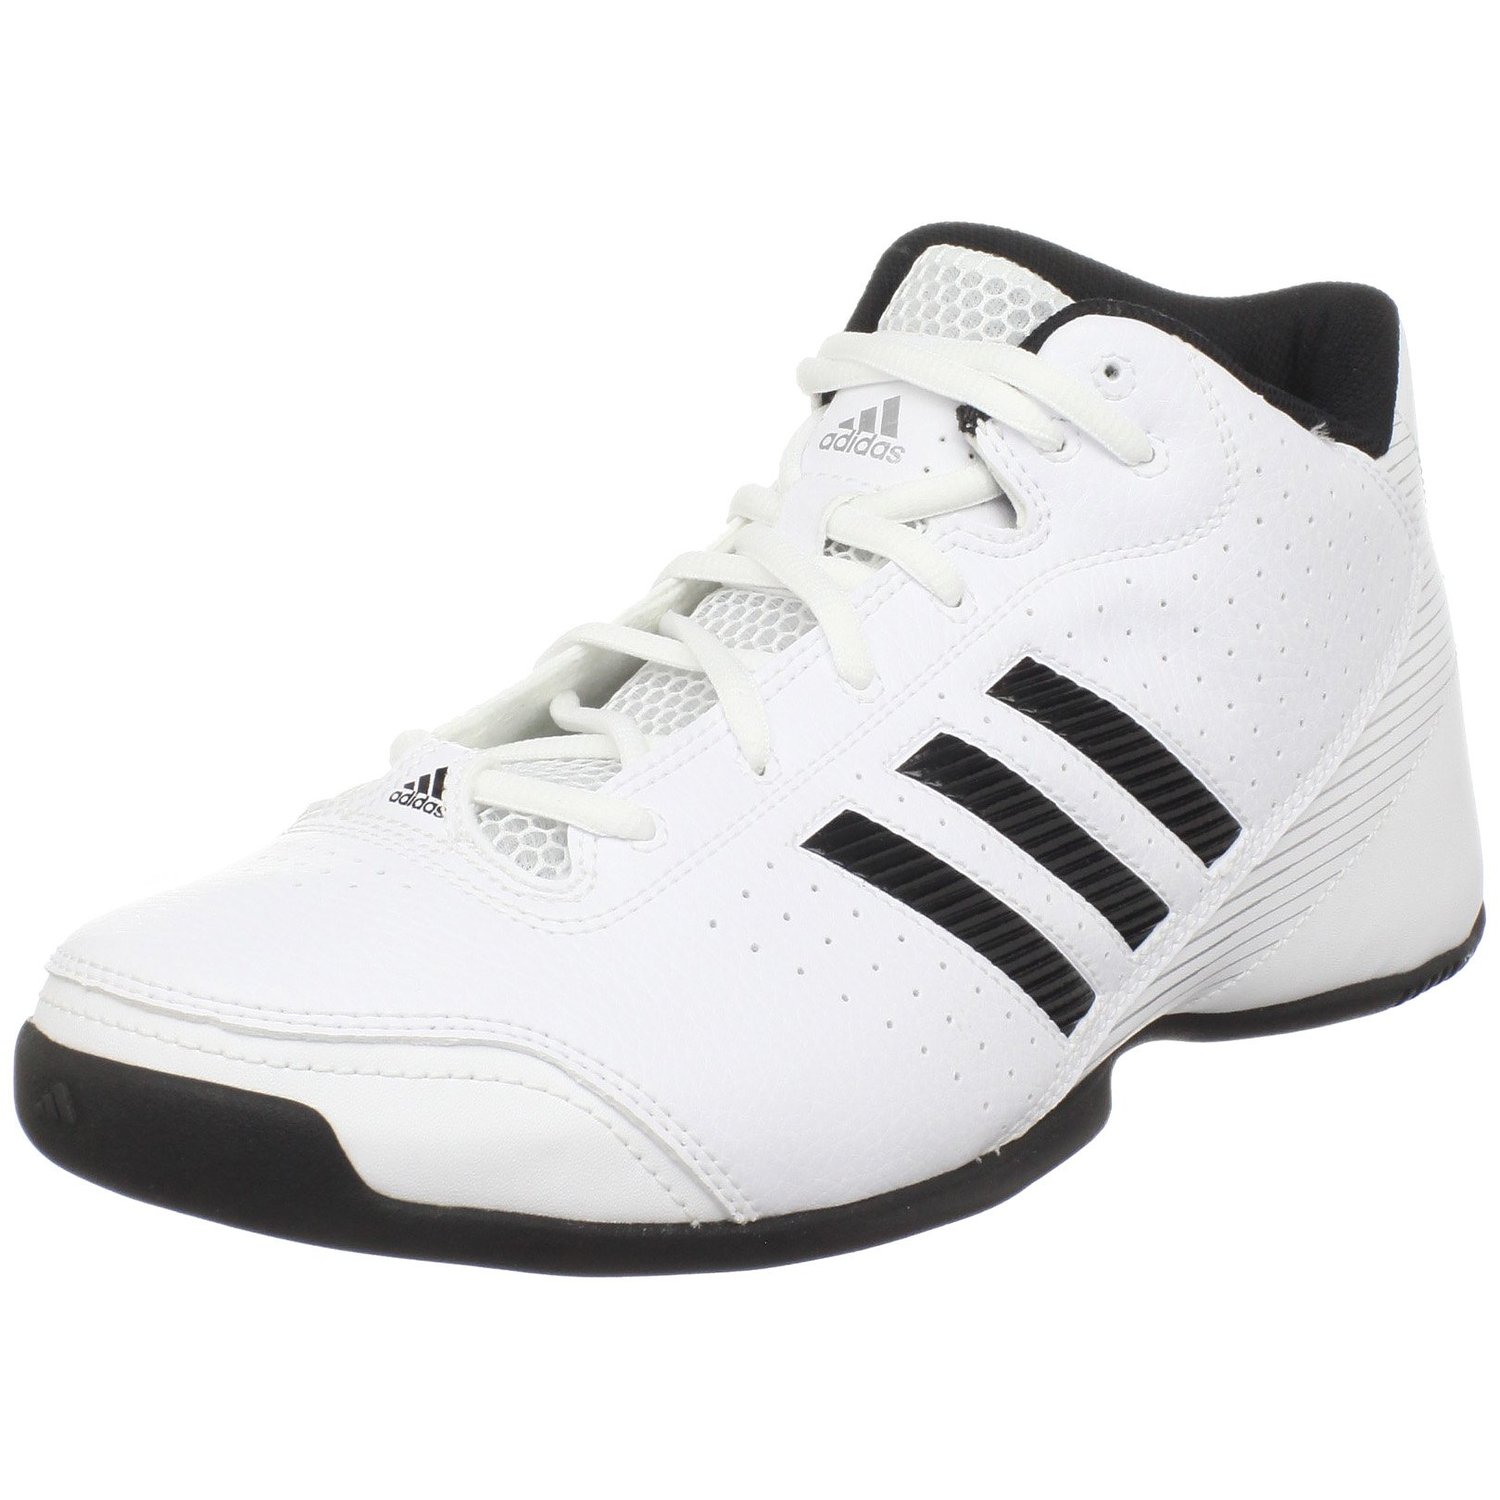 Adidas Series 2010 (Blanco/Negro) - manelsanchez.com